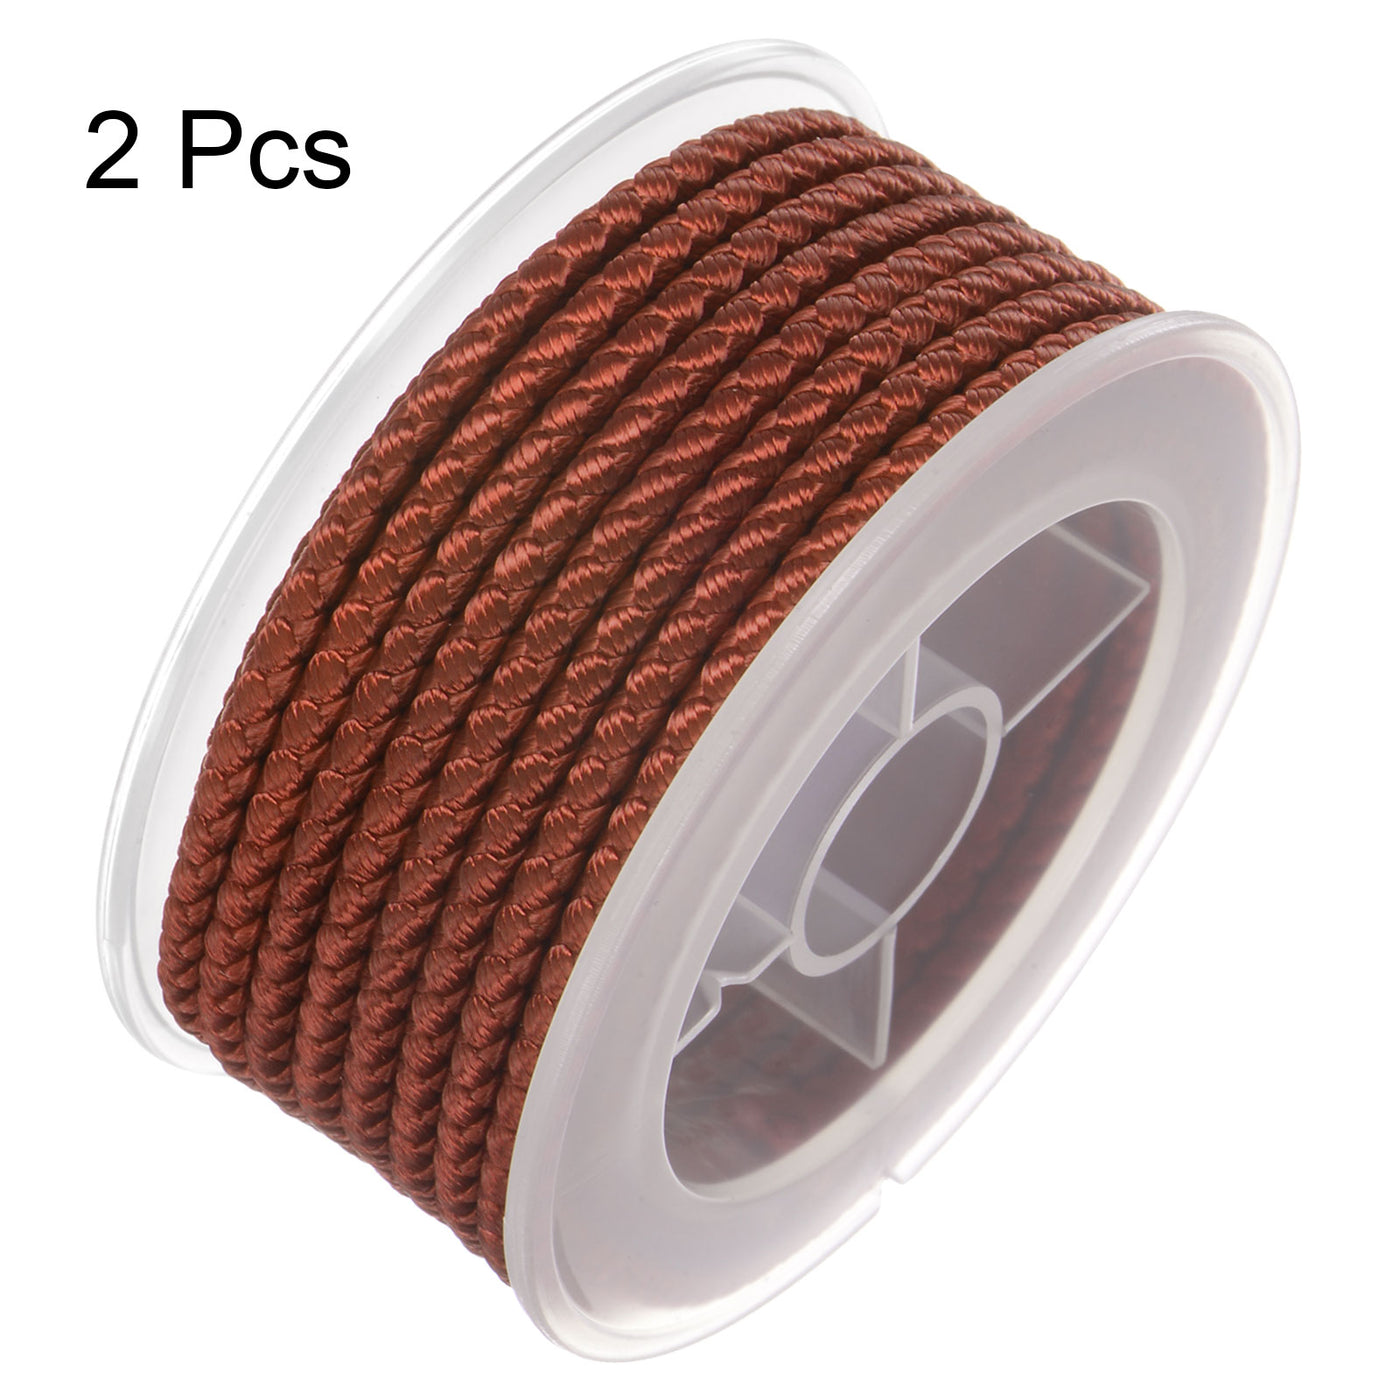 Harfington 2pcs Nylon Thread Twine Beading Cord 4mm Braided String 10.5 Feet, Saddle Brown